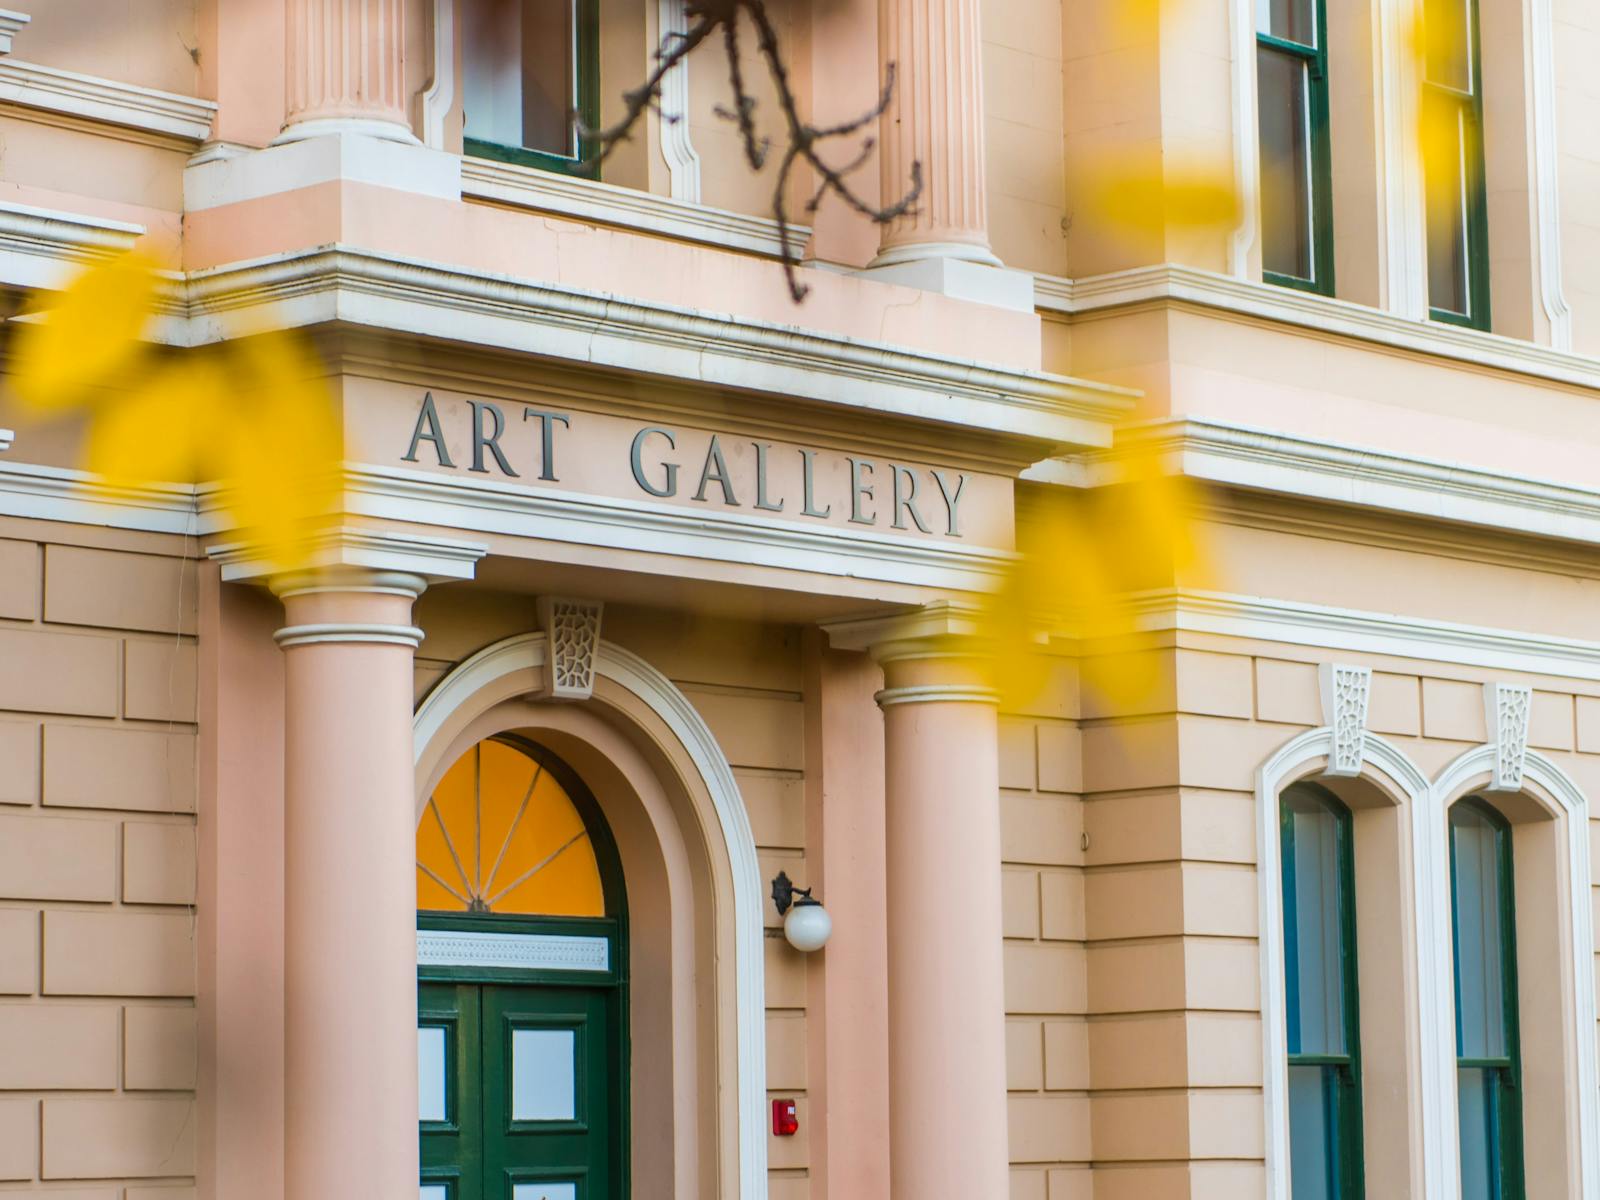 Art Gallery at Royal Park building exterior